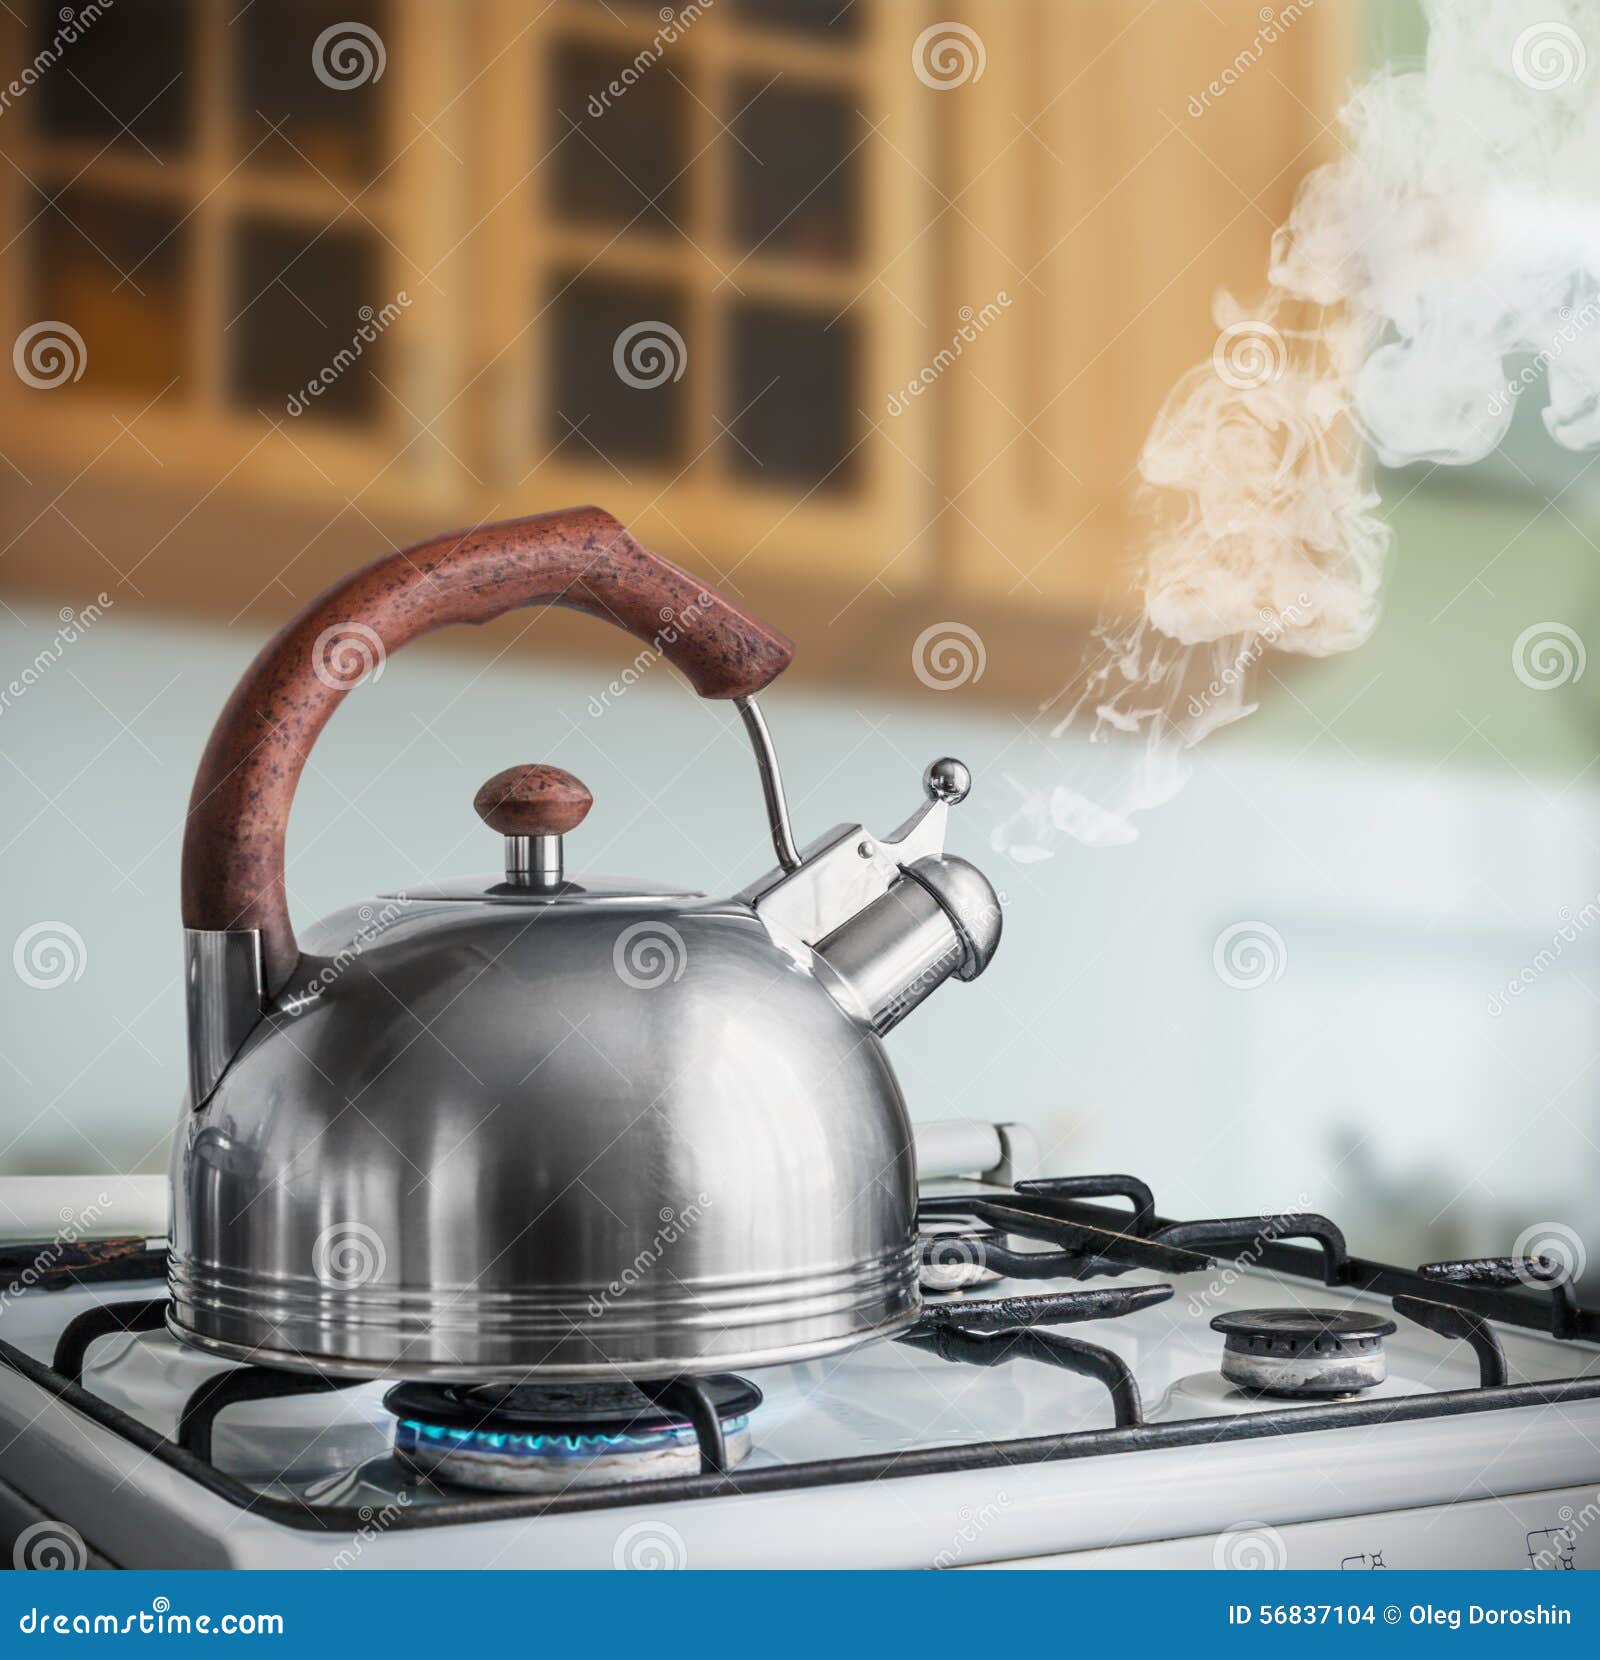 https://thumbs.dreamstime.com/z/kettle-boiling-gas-stove-kitchen-focus-spout-56837104.jpg